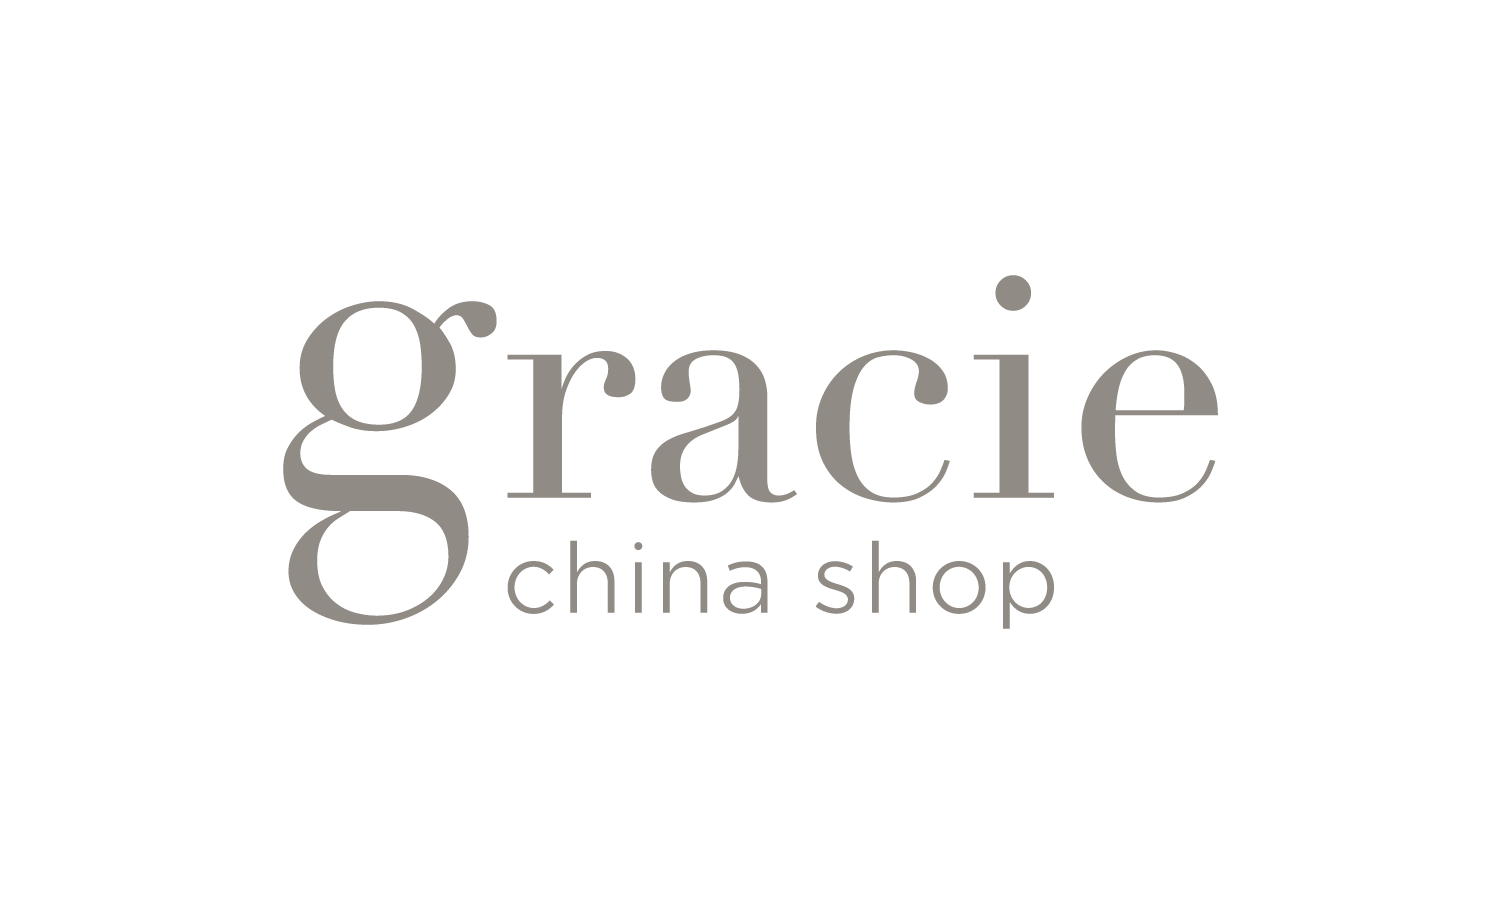 GracieChinaShop